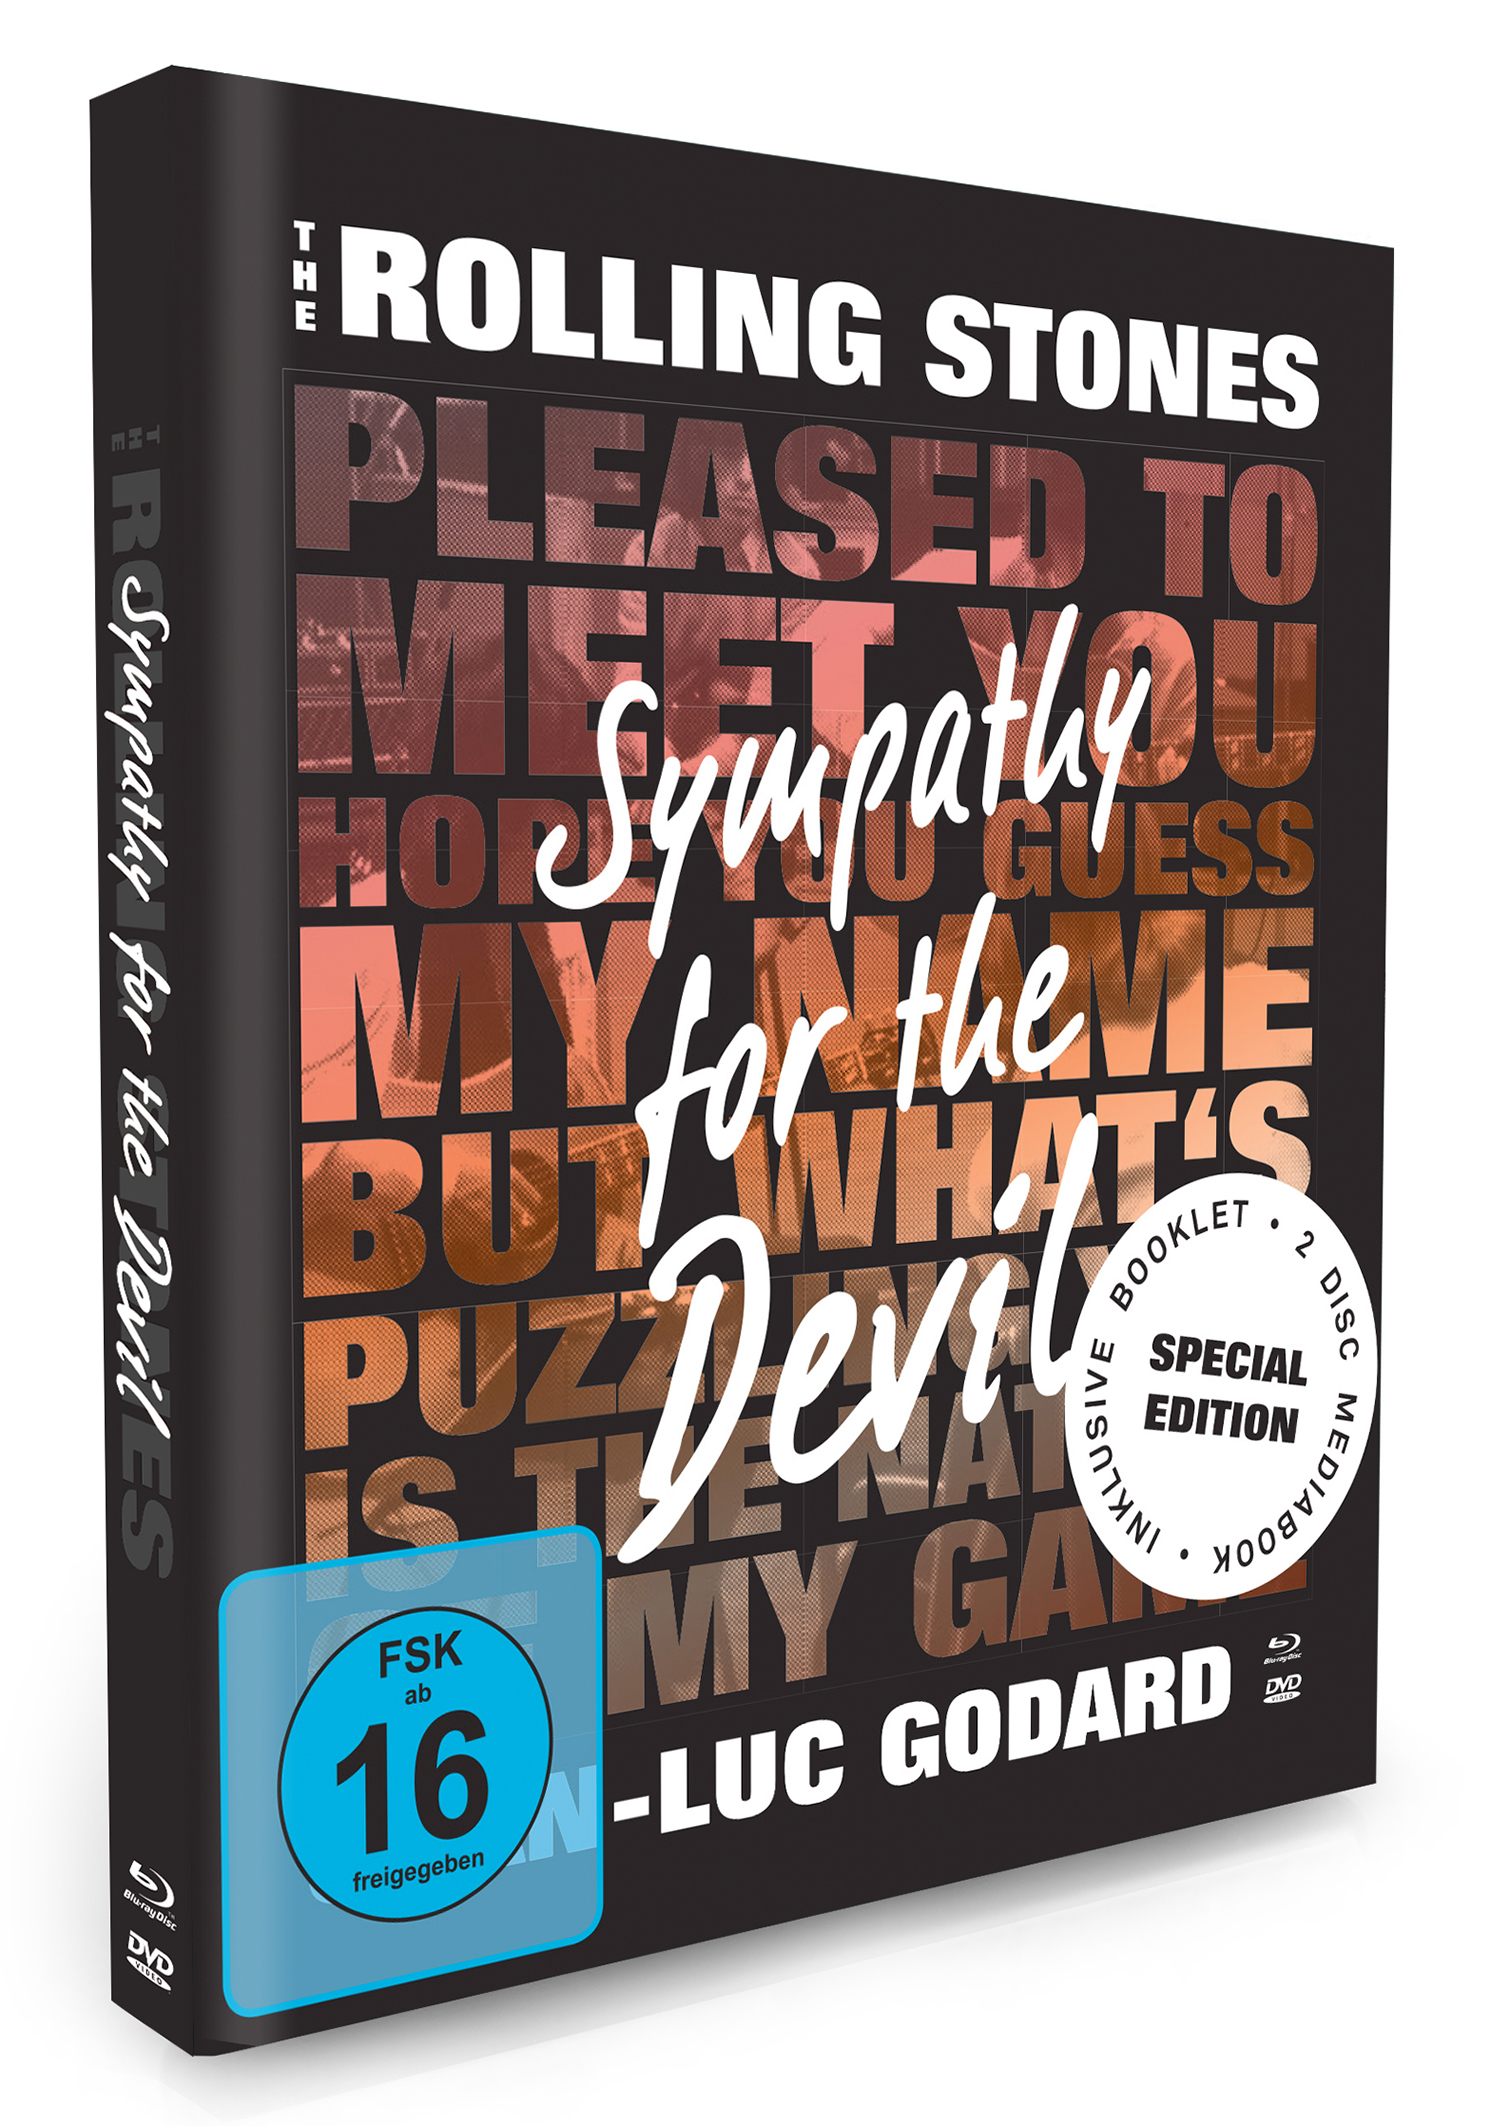 Stones: Devil The (Mediabook) The For Rolling DVD Sympathy